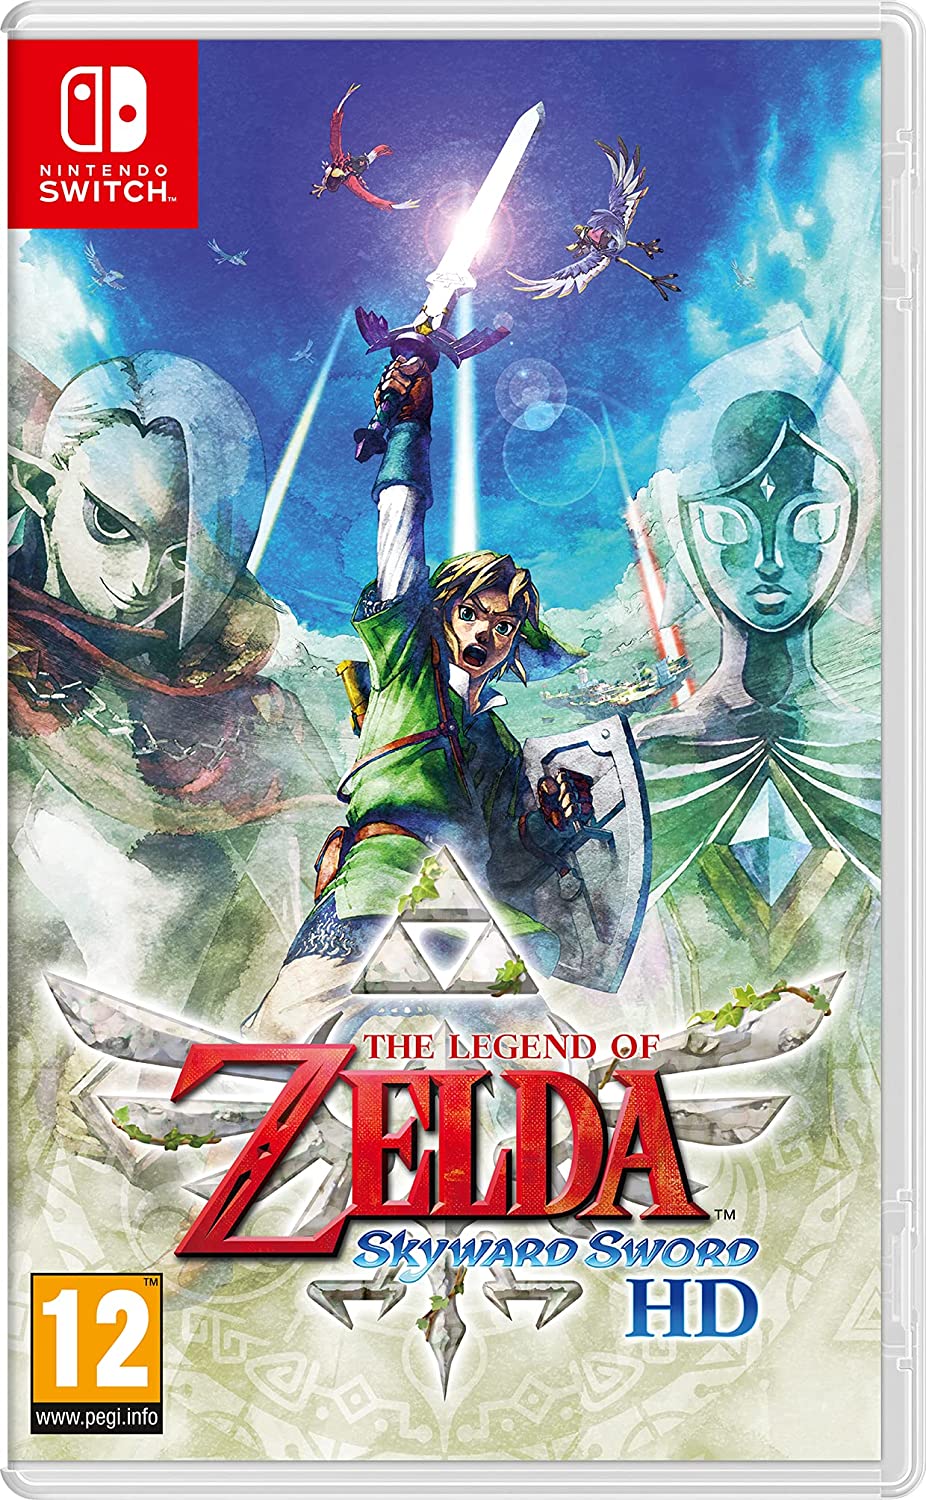 Das Cover von The Legend of Zelda: Skyward Sword.